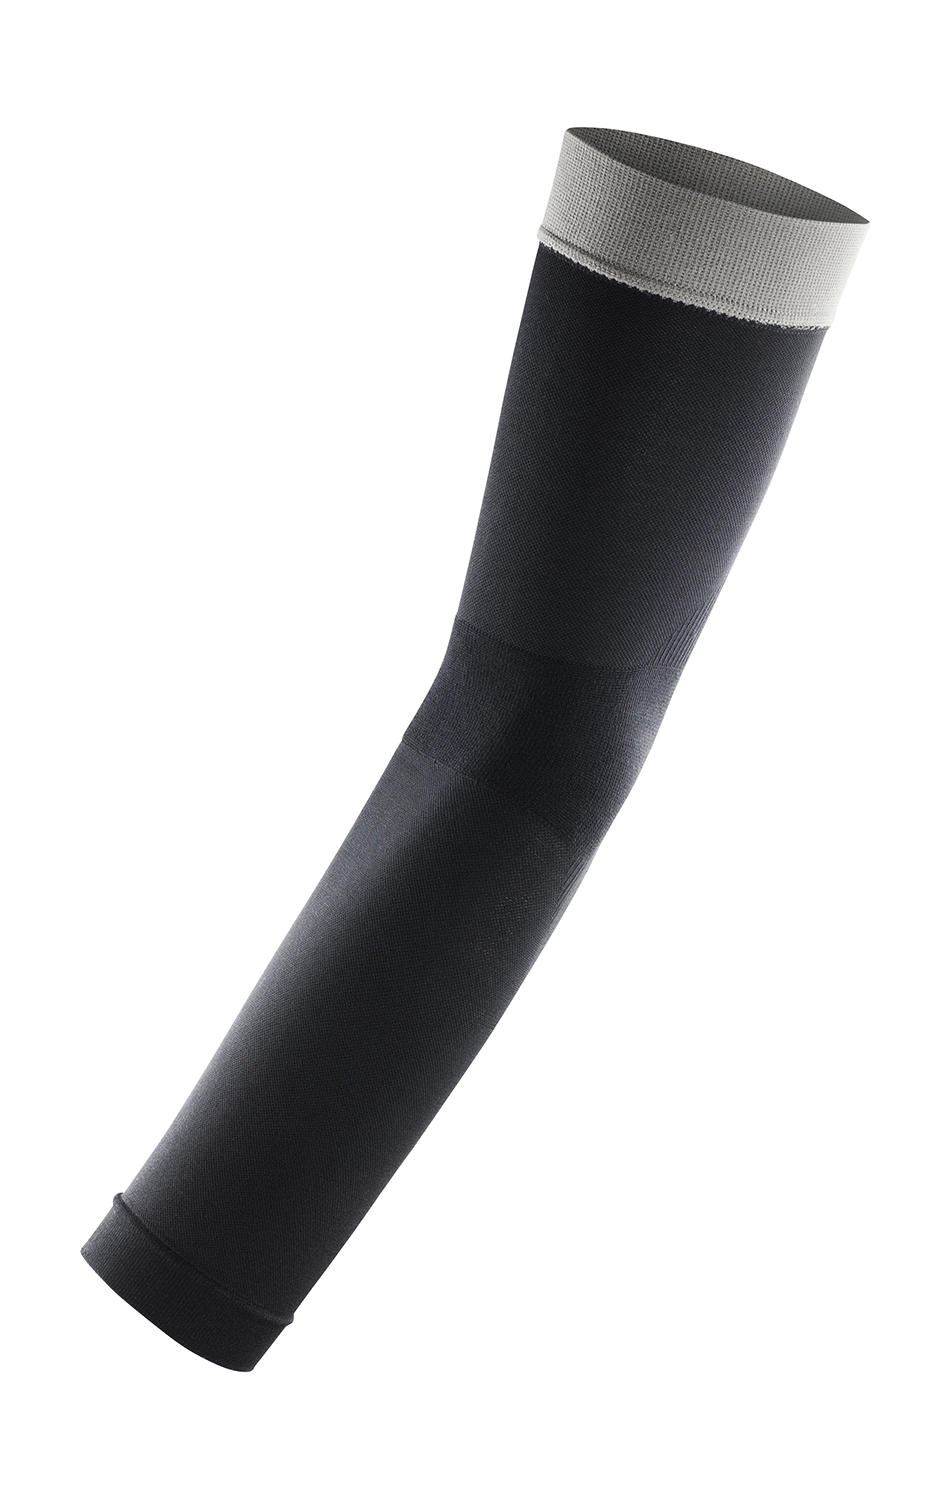  Compression Arm Sleeve in Farbe Black/Grey